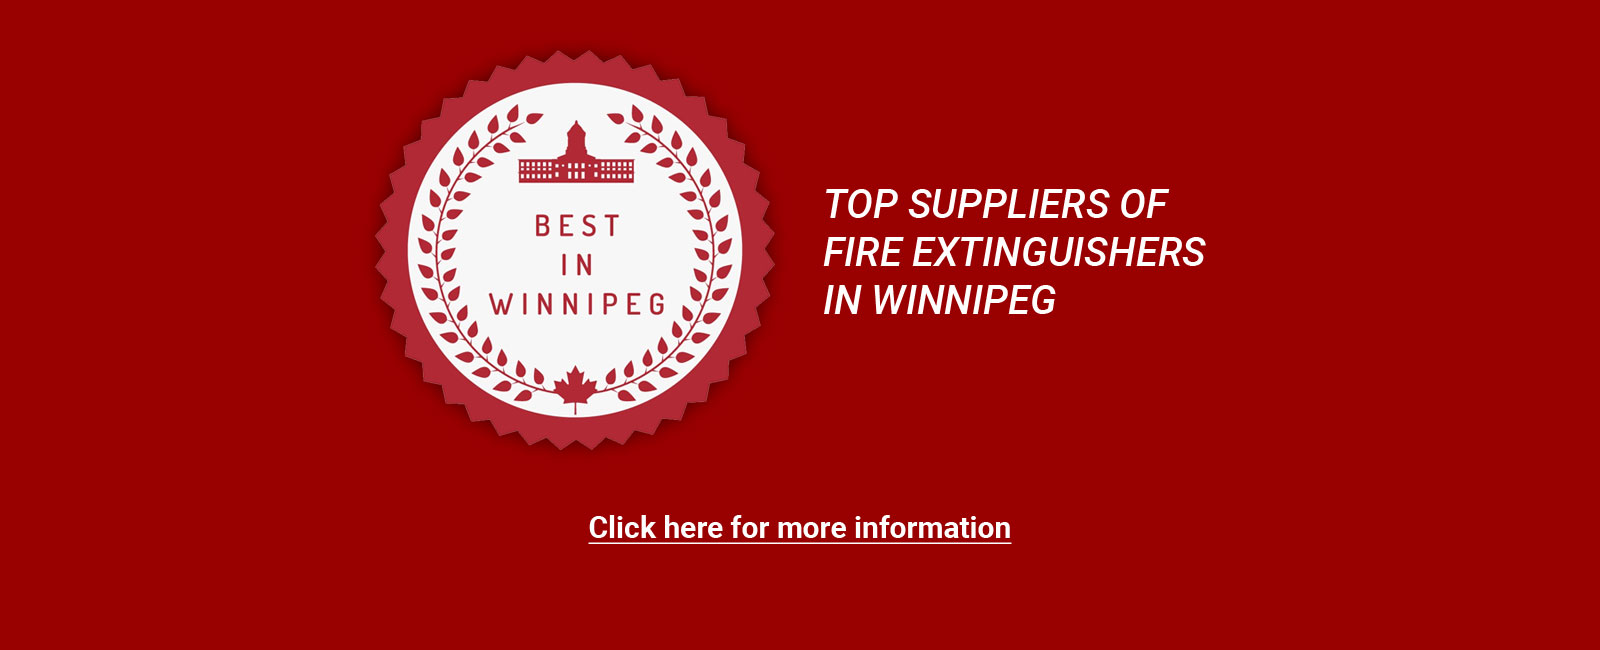 Top Suppliers of Fire Extinguishers in Winnipeg